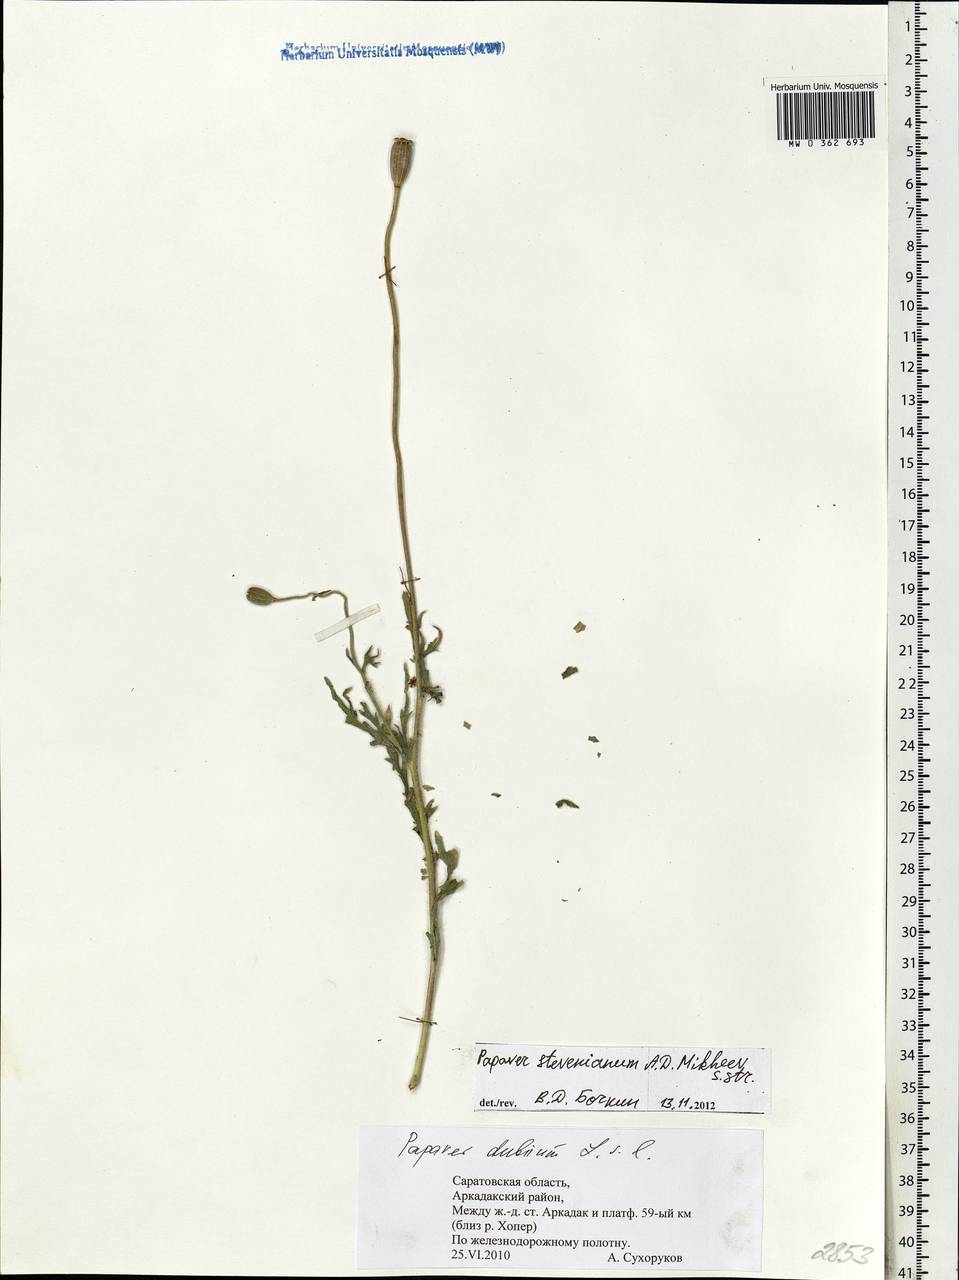 Papaver dubium subsp. stevenianum (Mikheev) Kubát & Å, Eastern Europe, Lower Volga region (E9) (Russia)